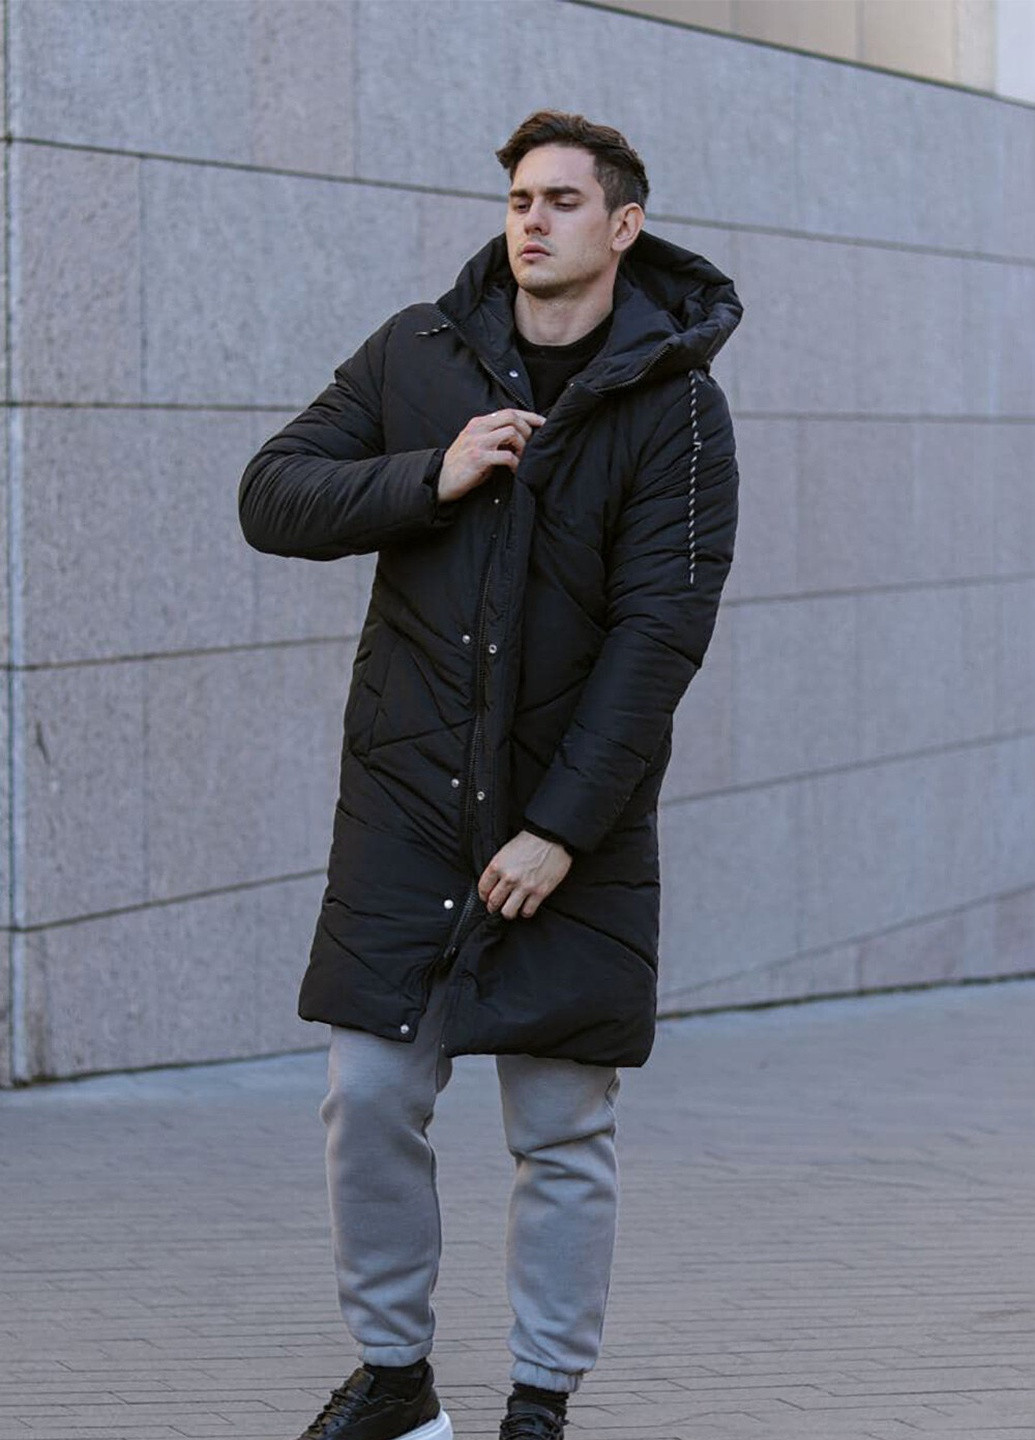 Черная зимняя мужская зимняя куртка парка стебана .vidlik geometry с капишоном черная VDLK